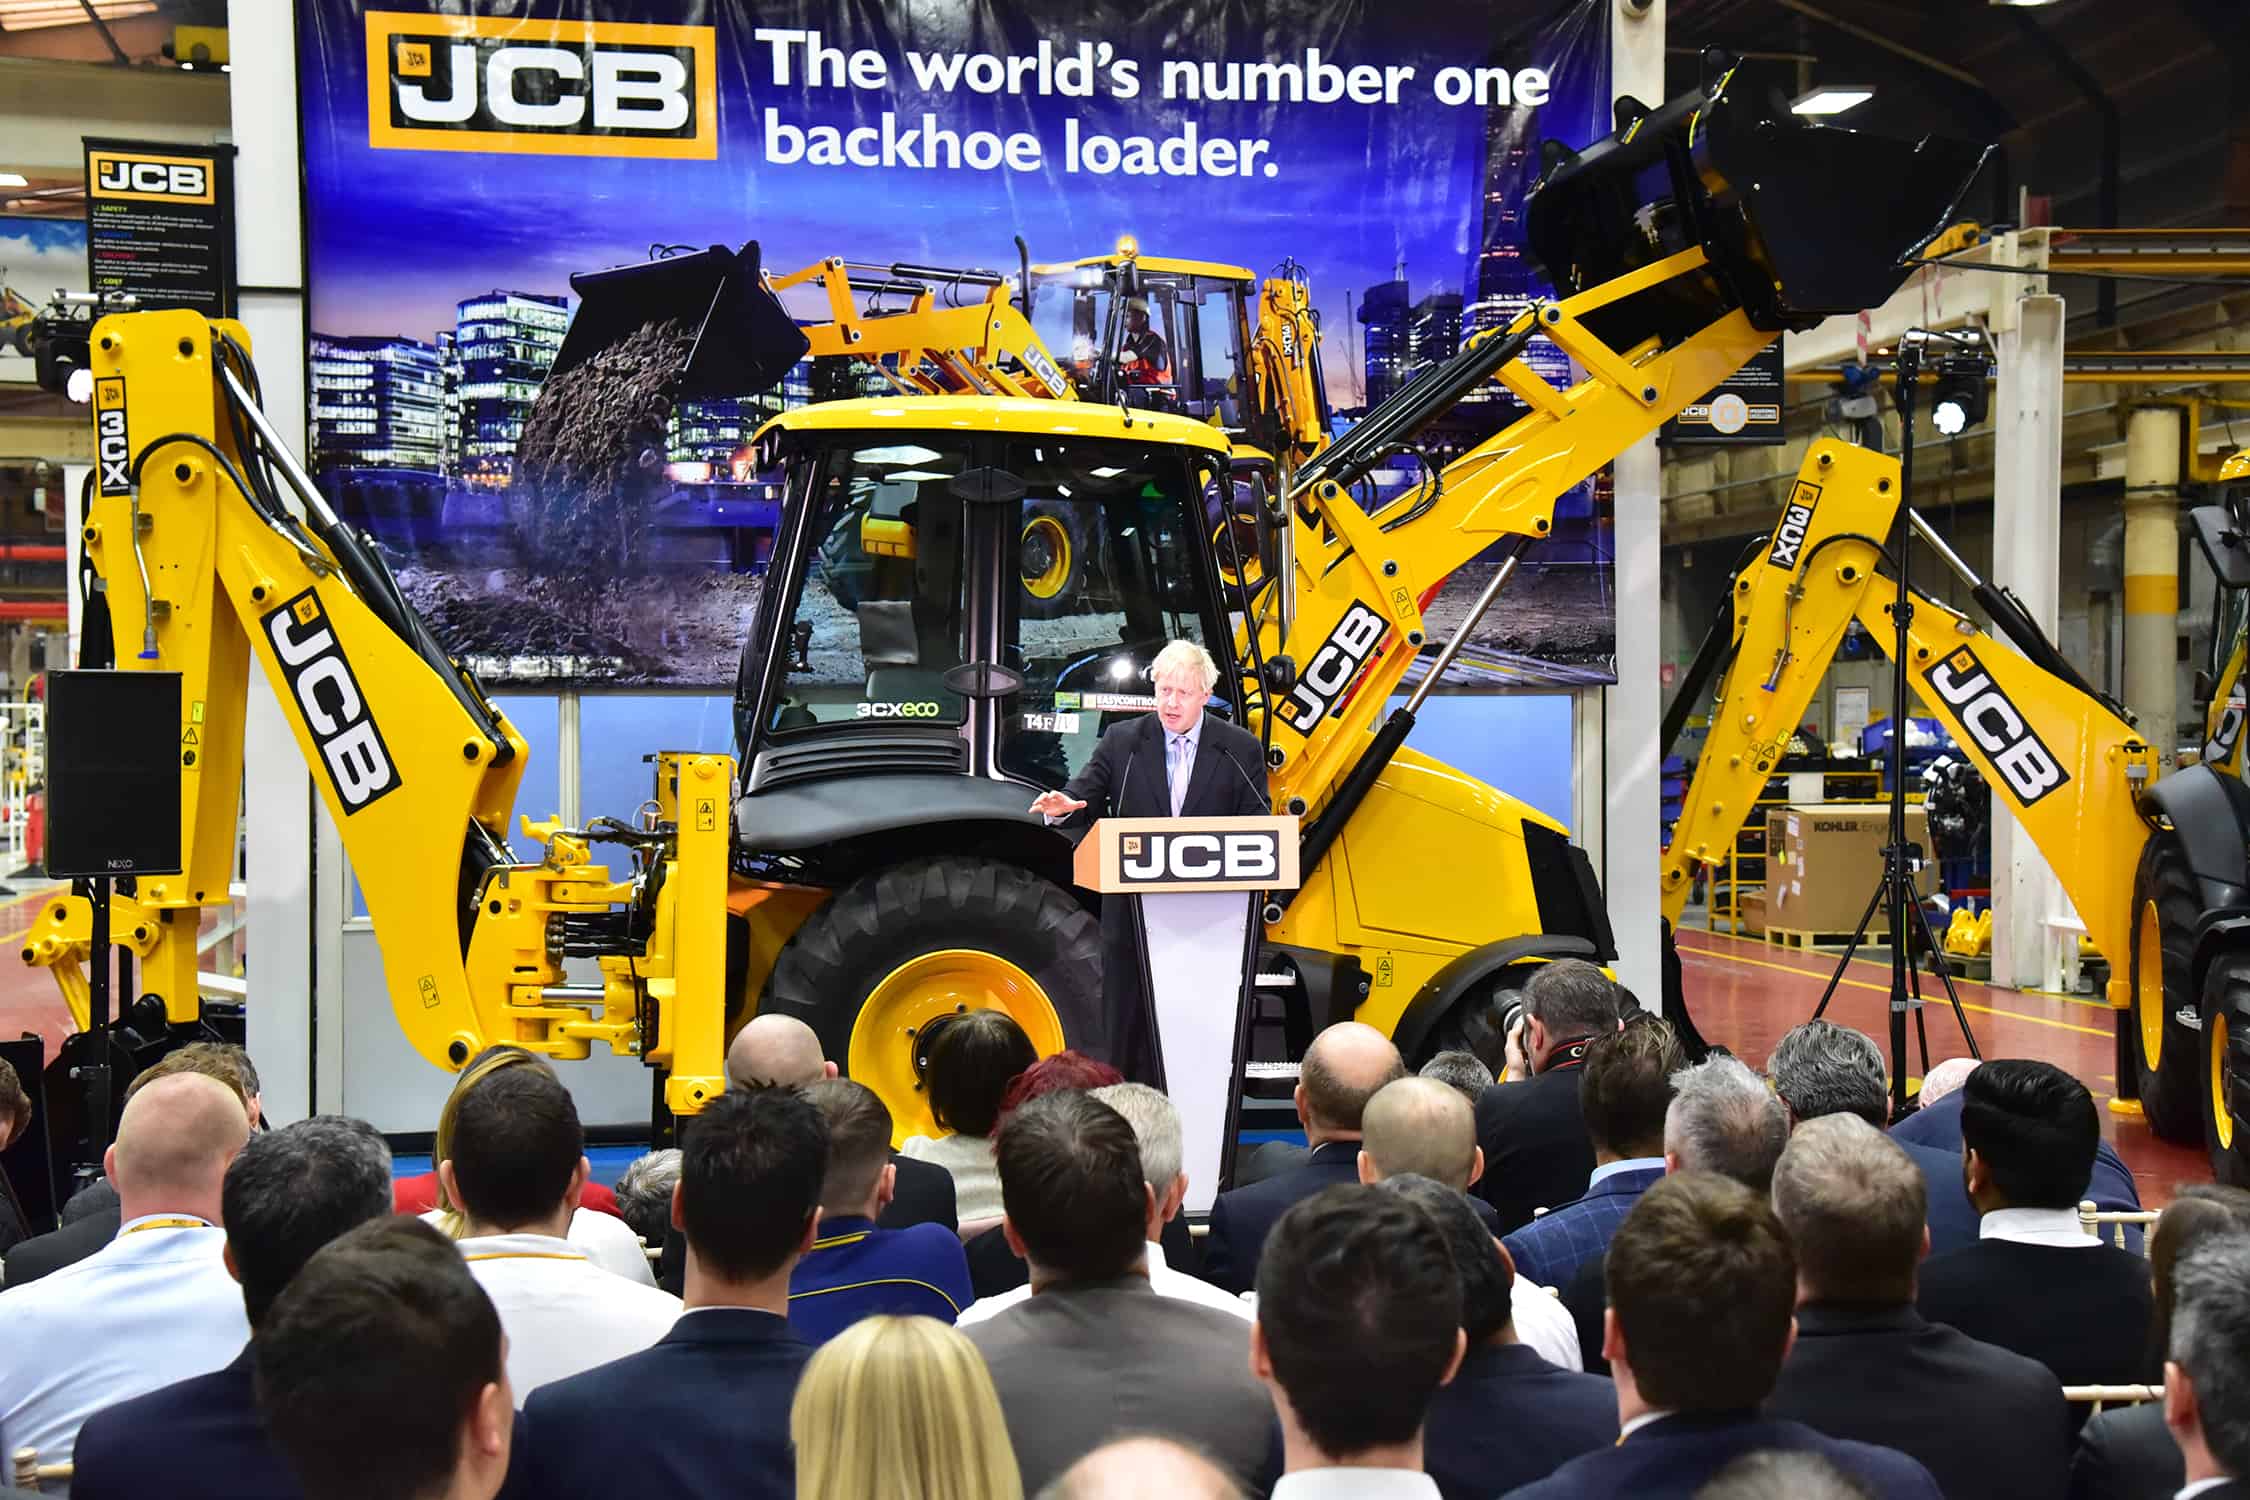 Boris Johnson MP visited JCB’s World HQ to deliver a keynote speech